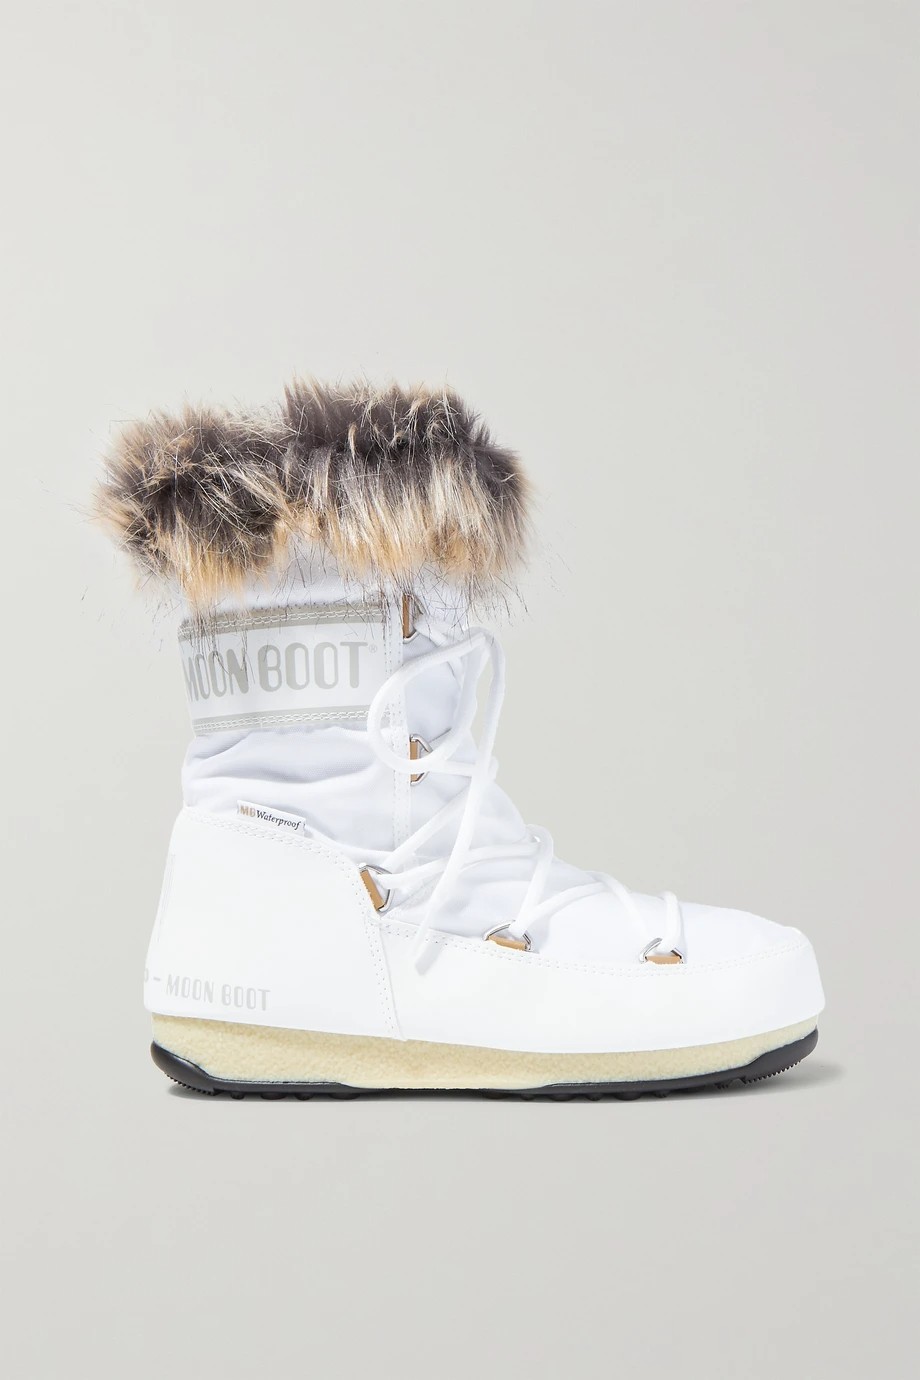 White Fur Snow Boots Women Winter Boots Plaid White Leather Comfortable Plush 